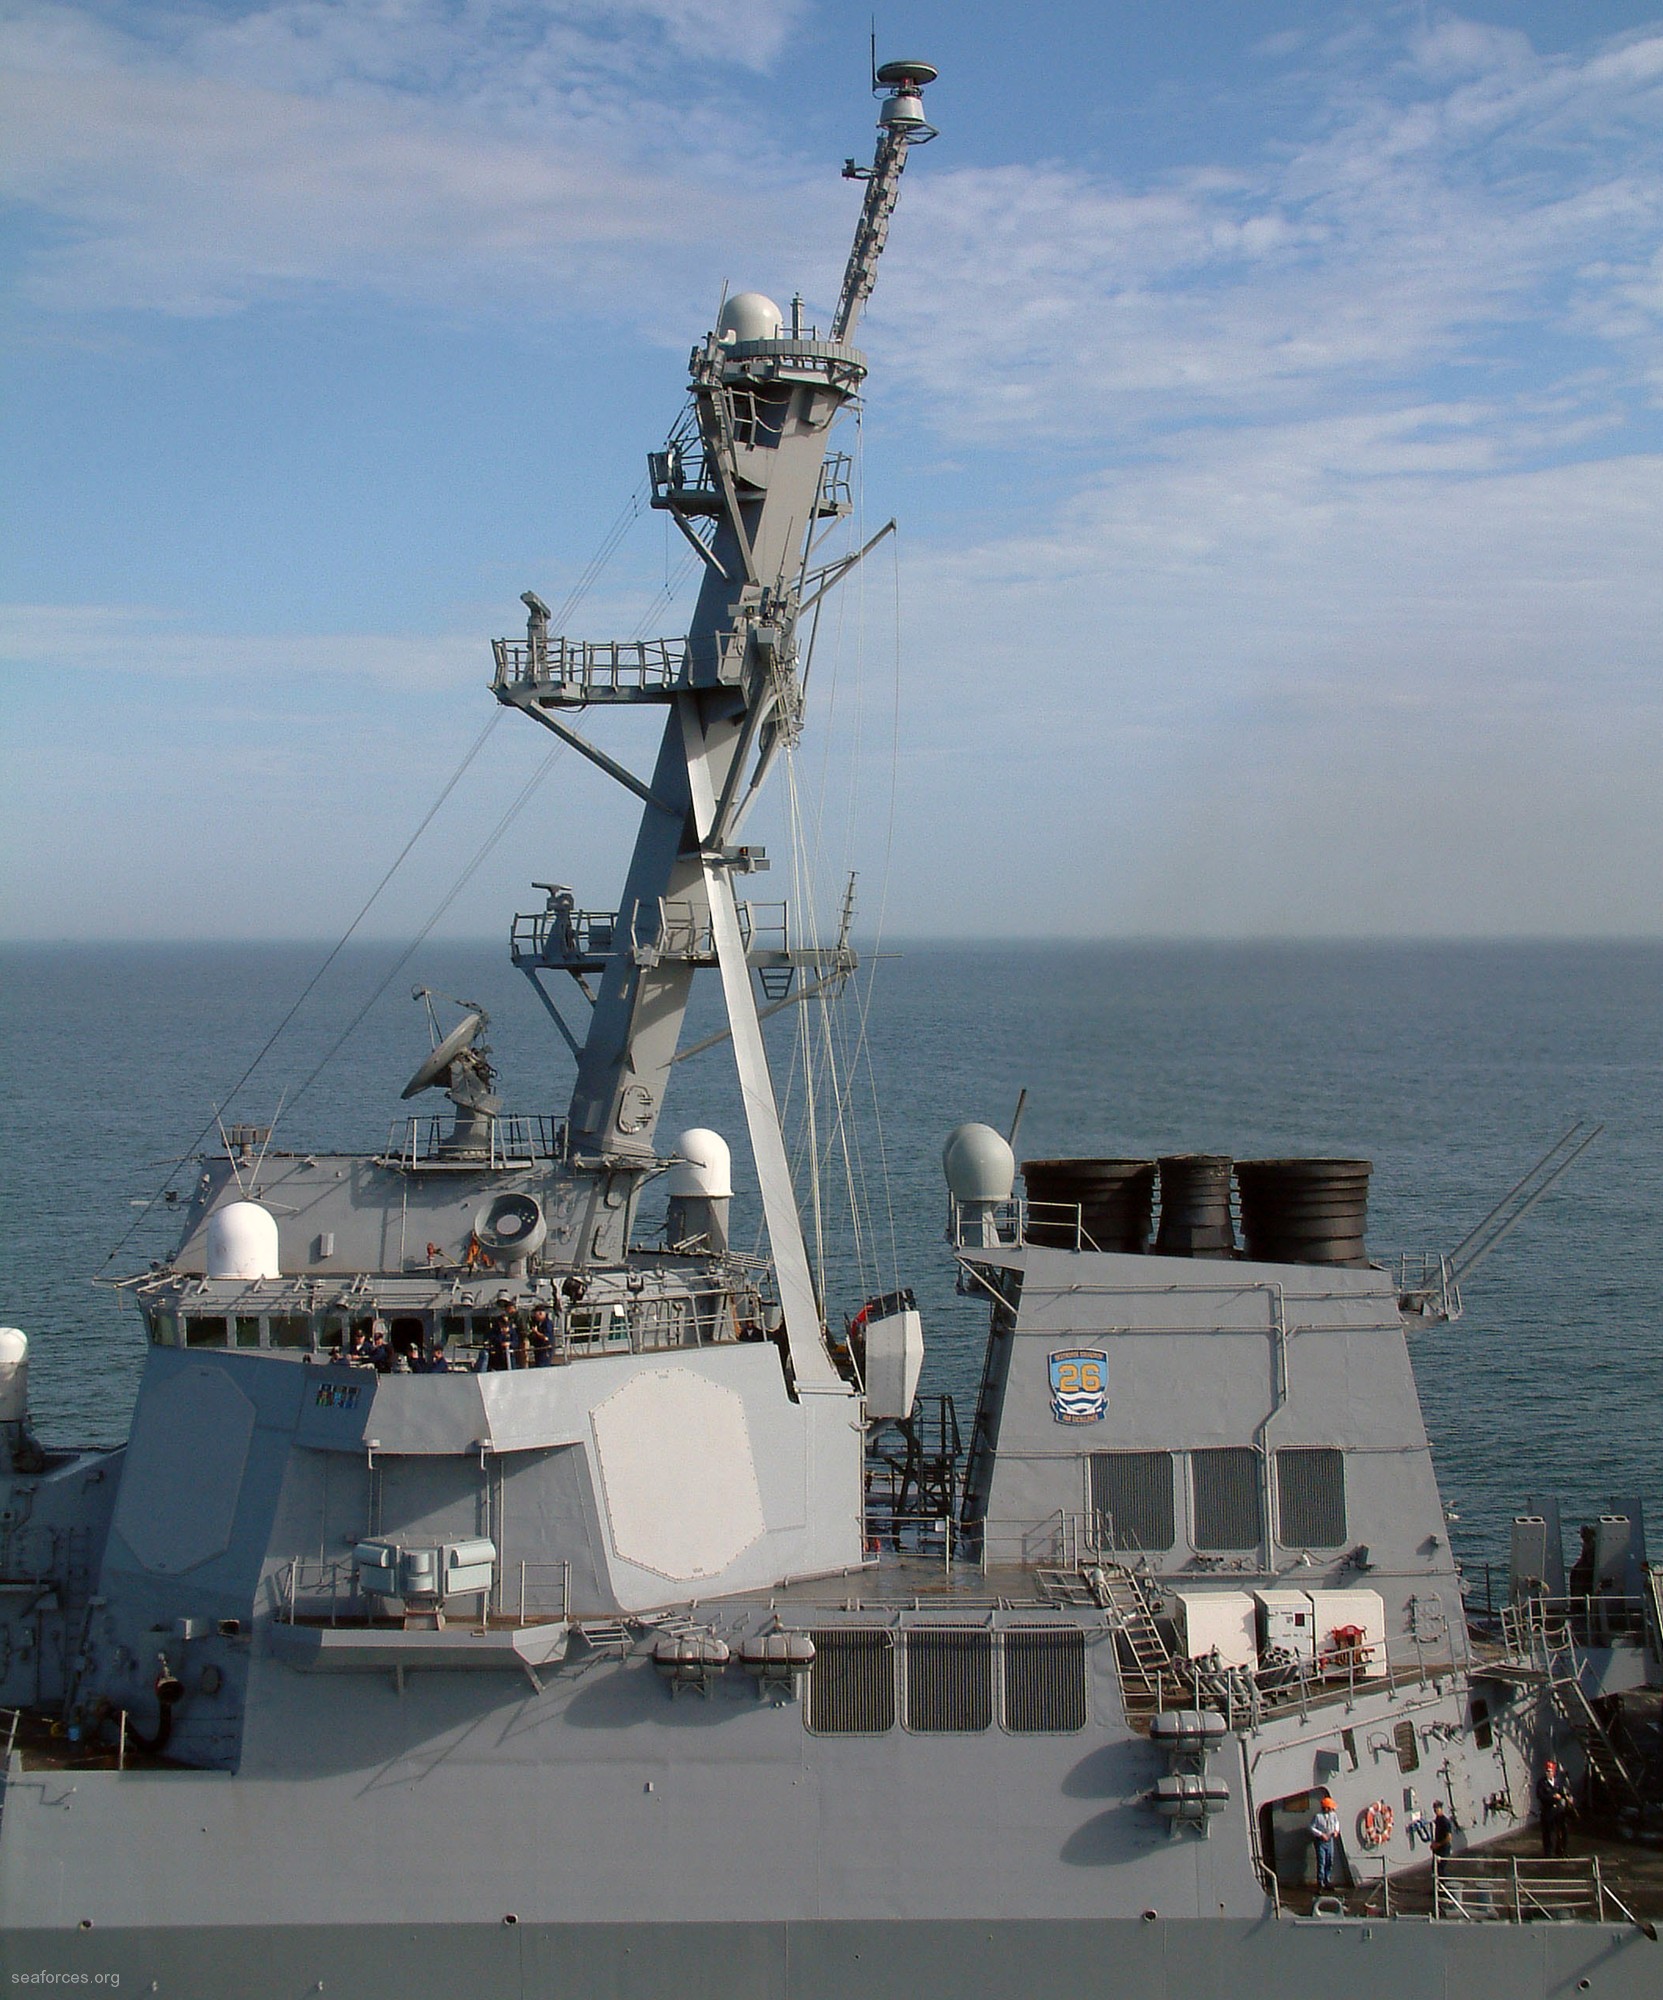 ddg-52 uss barry guided missile destroyer us navy 96 main mast an/spy-1d radar aegis